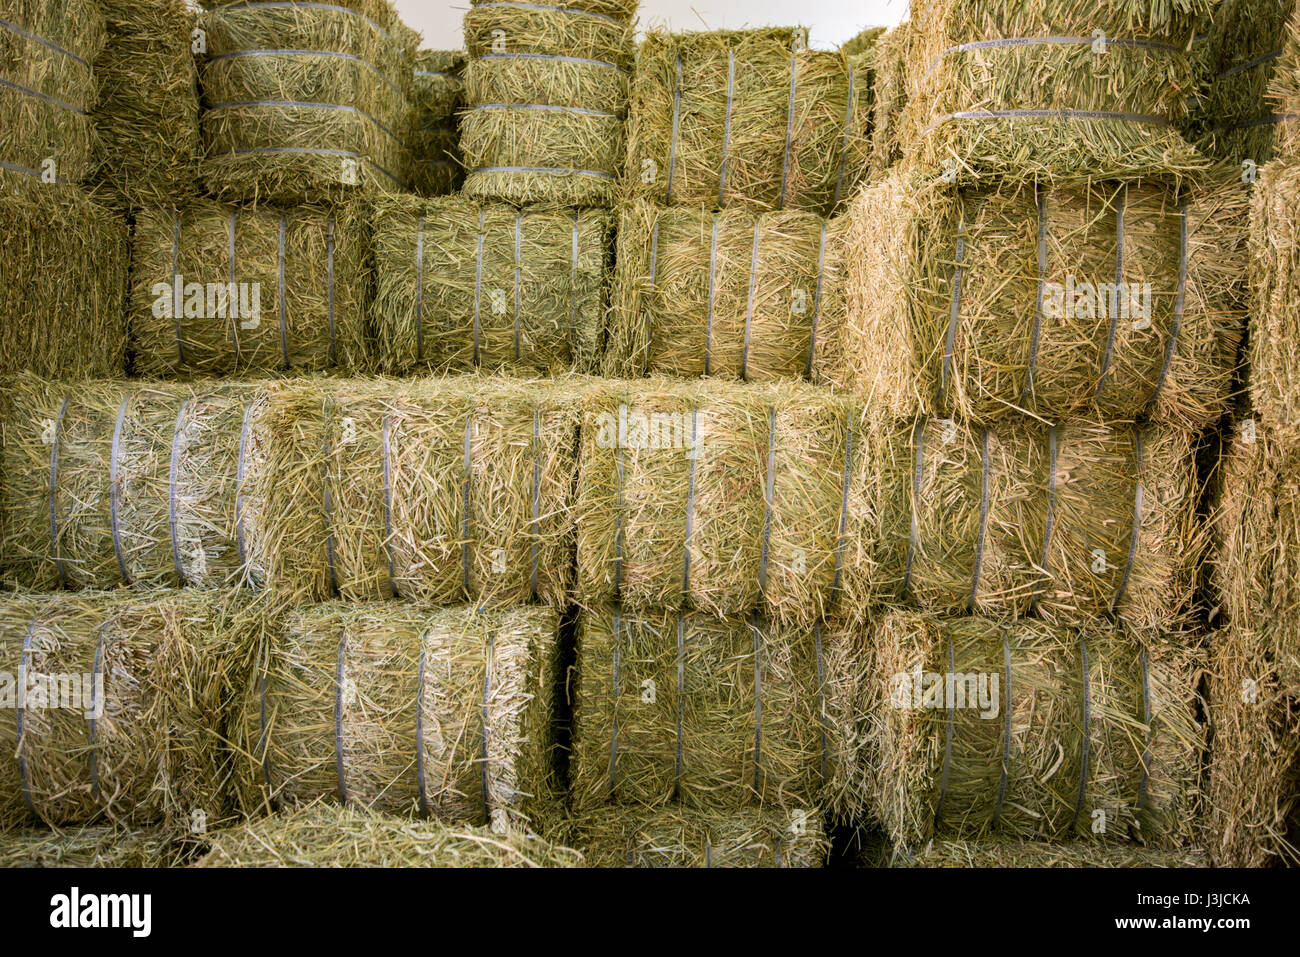 United Arab Emirates - Bales of hay in Dubai Stock Photo - Alamy